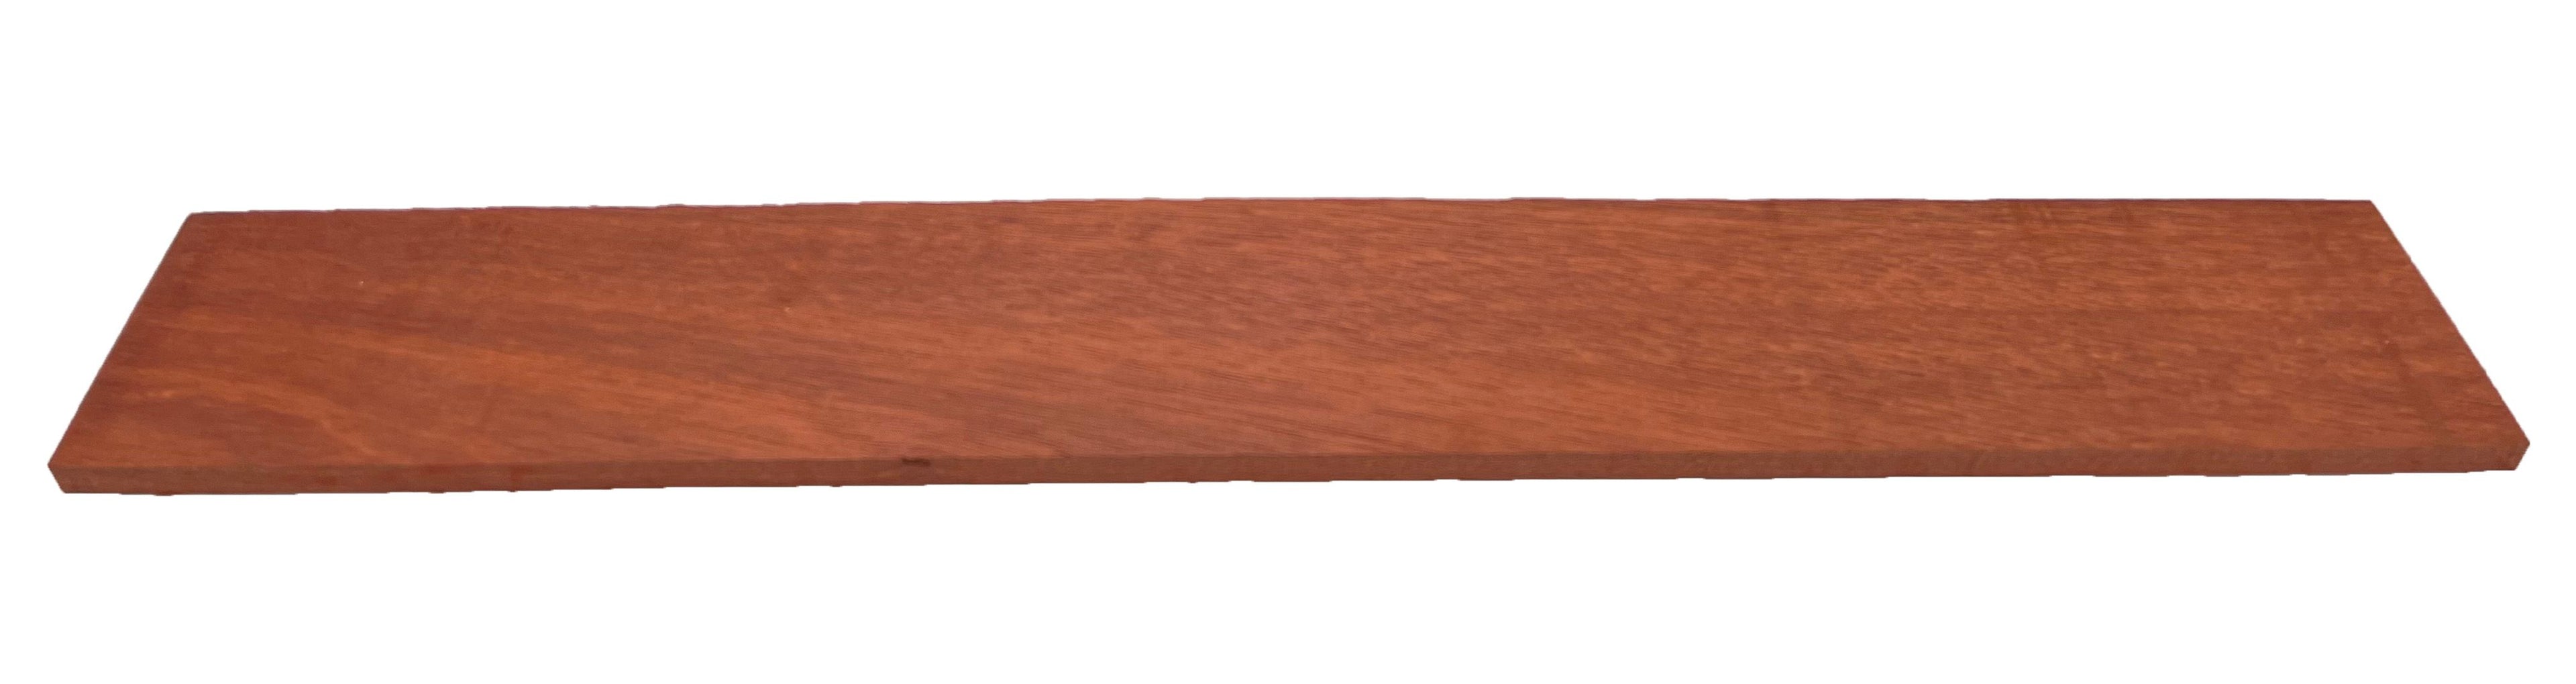 Bloodwood Guitar Fingerboard Blank - Exotic Wood Zone - Buy online Across USA 